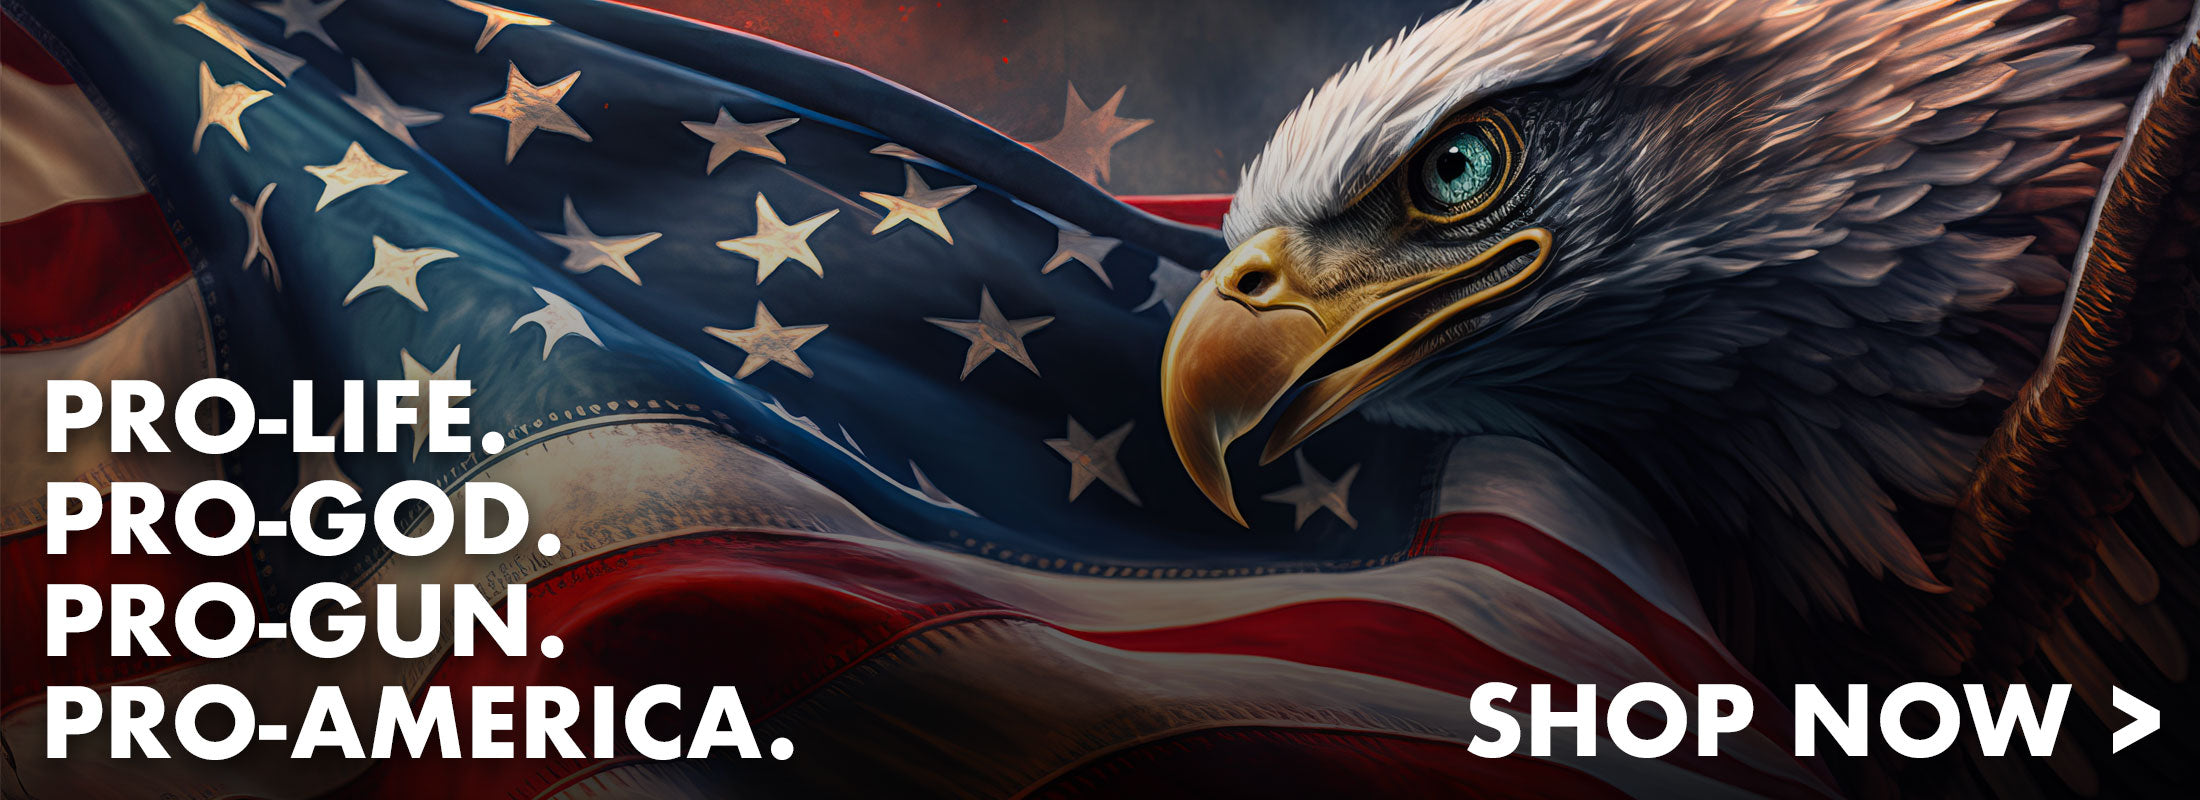 Eagle of America Facebook Cover Photo